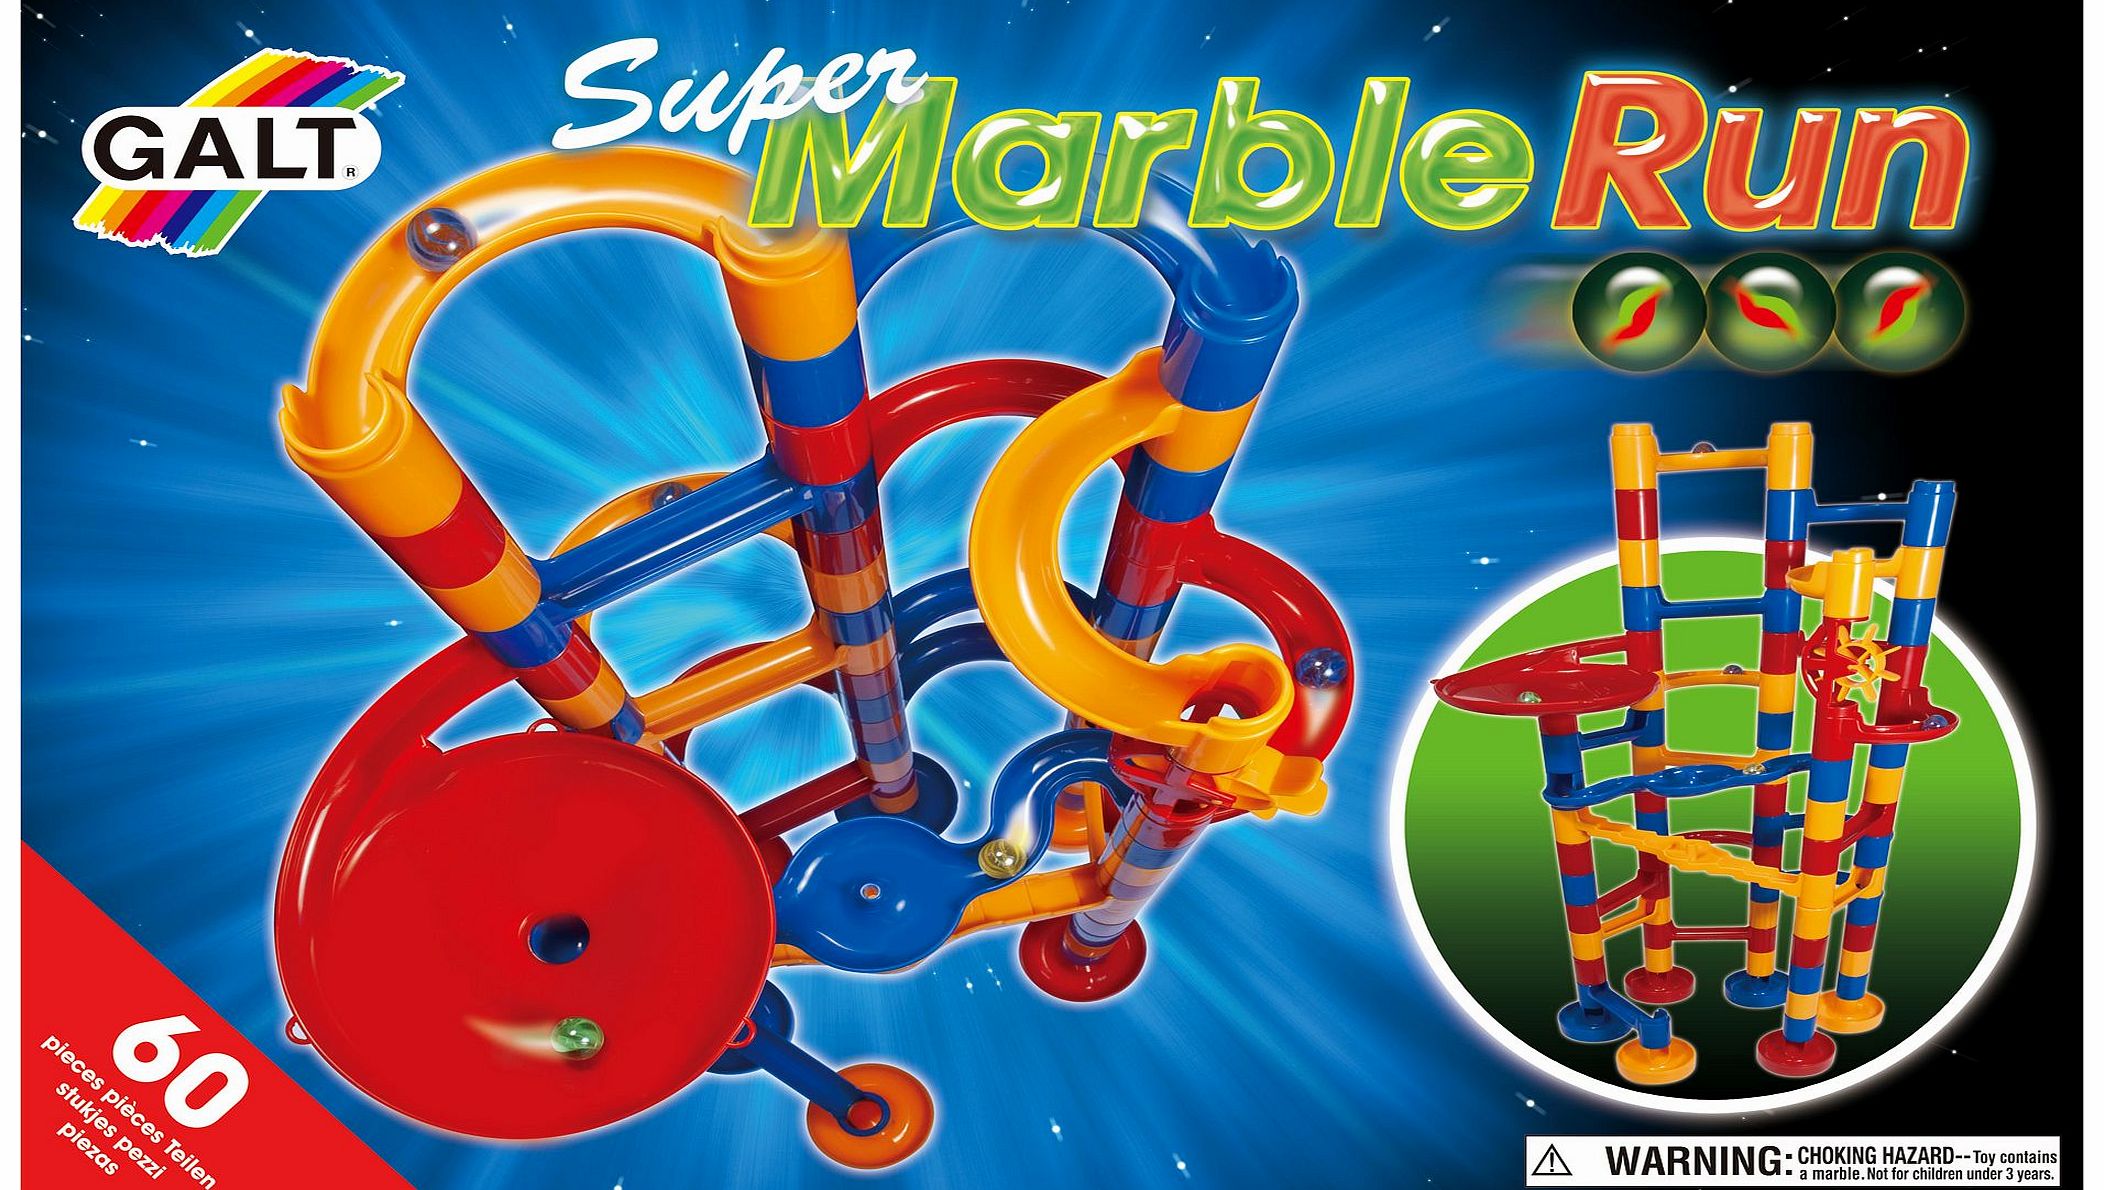 Galt Toys Super Marble Run